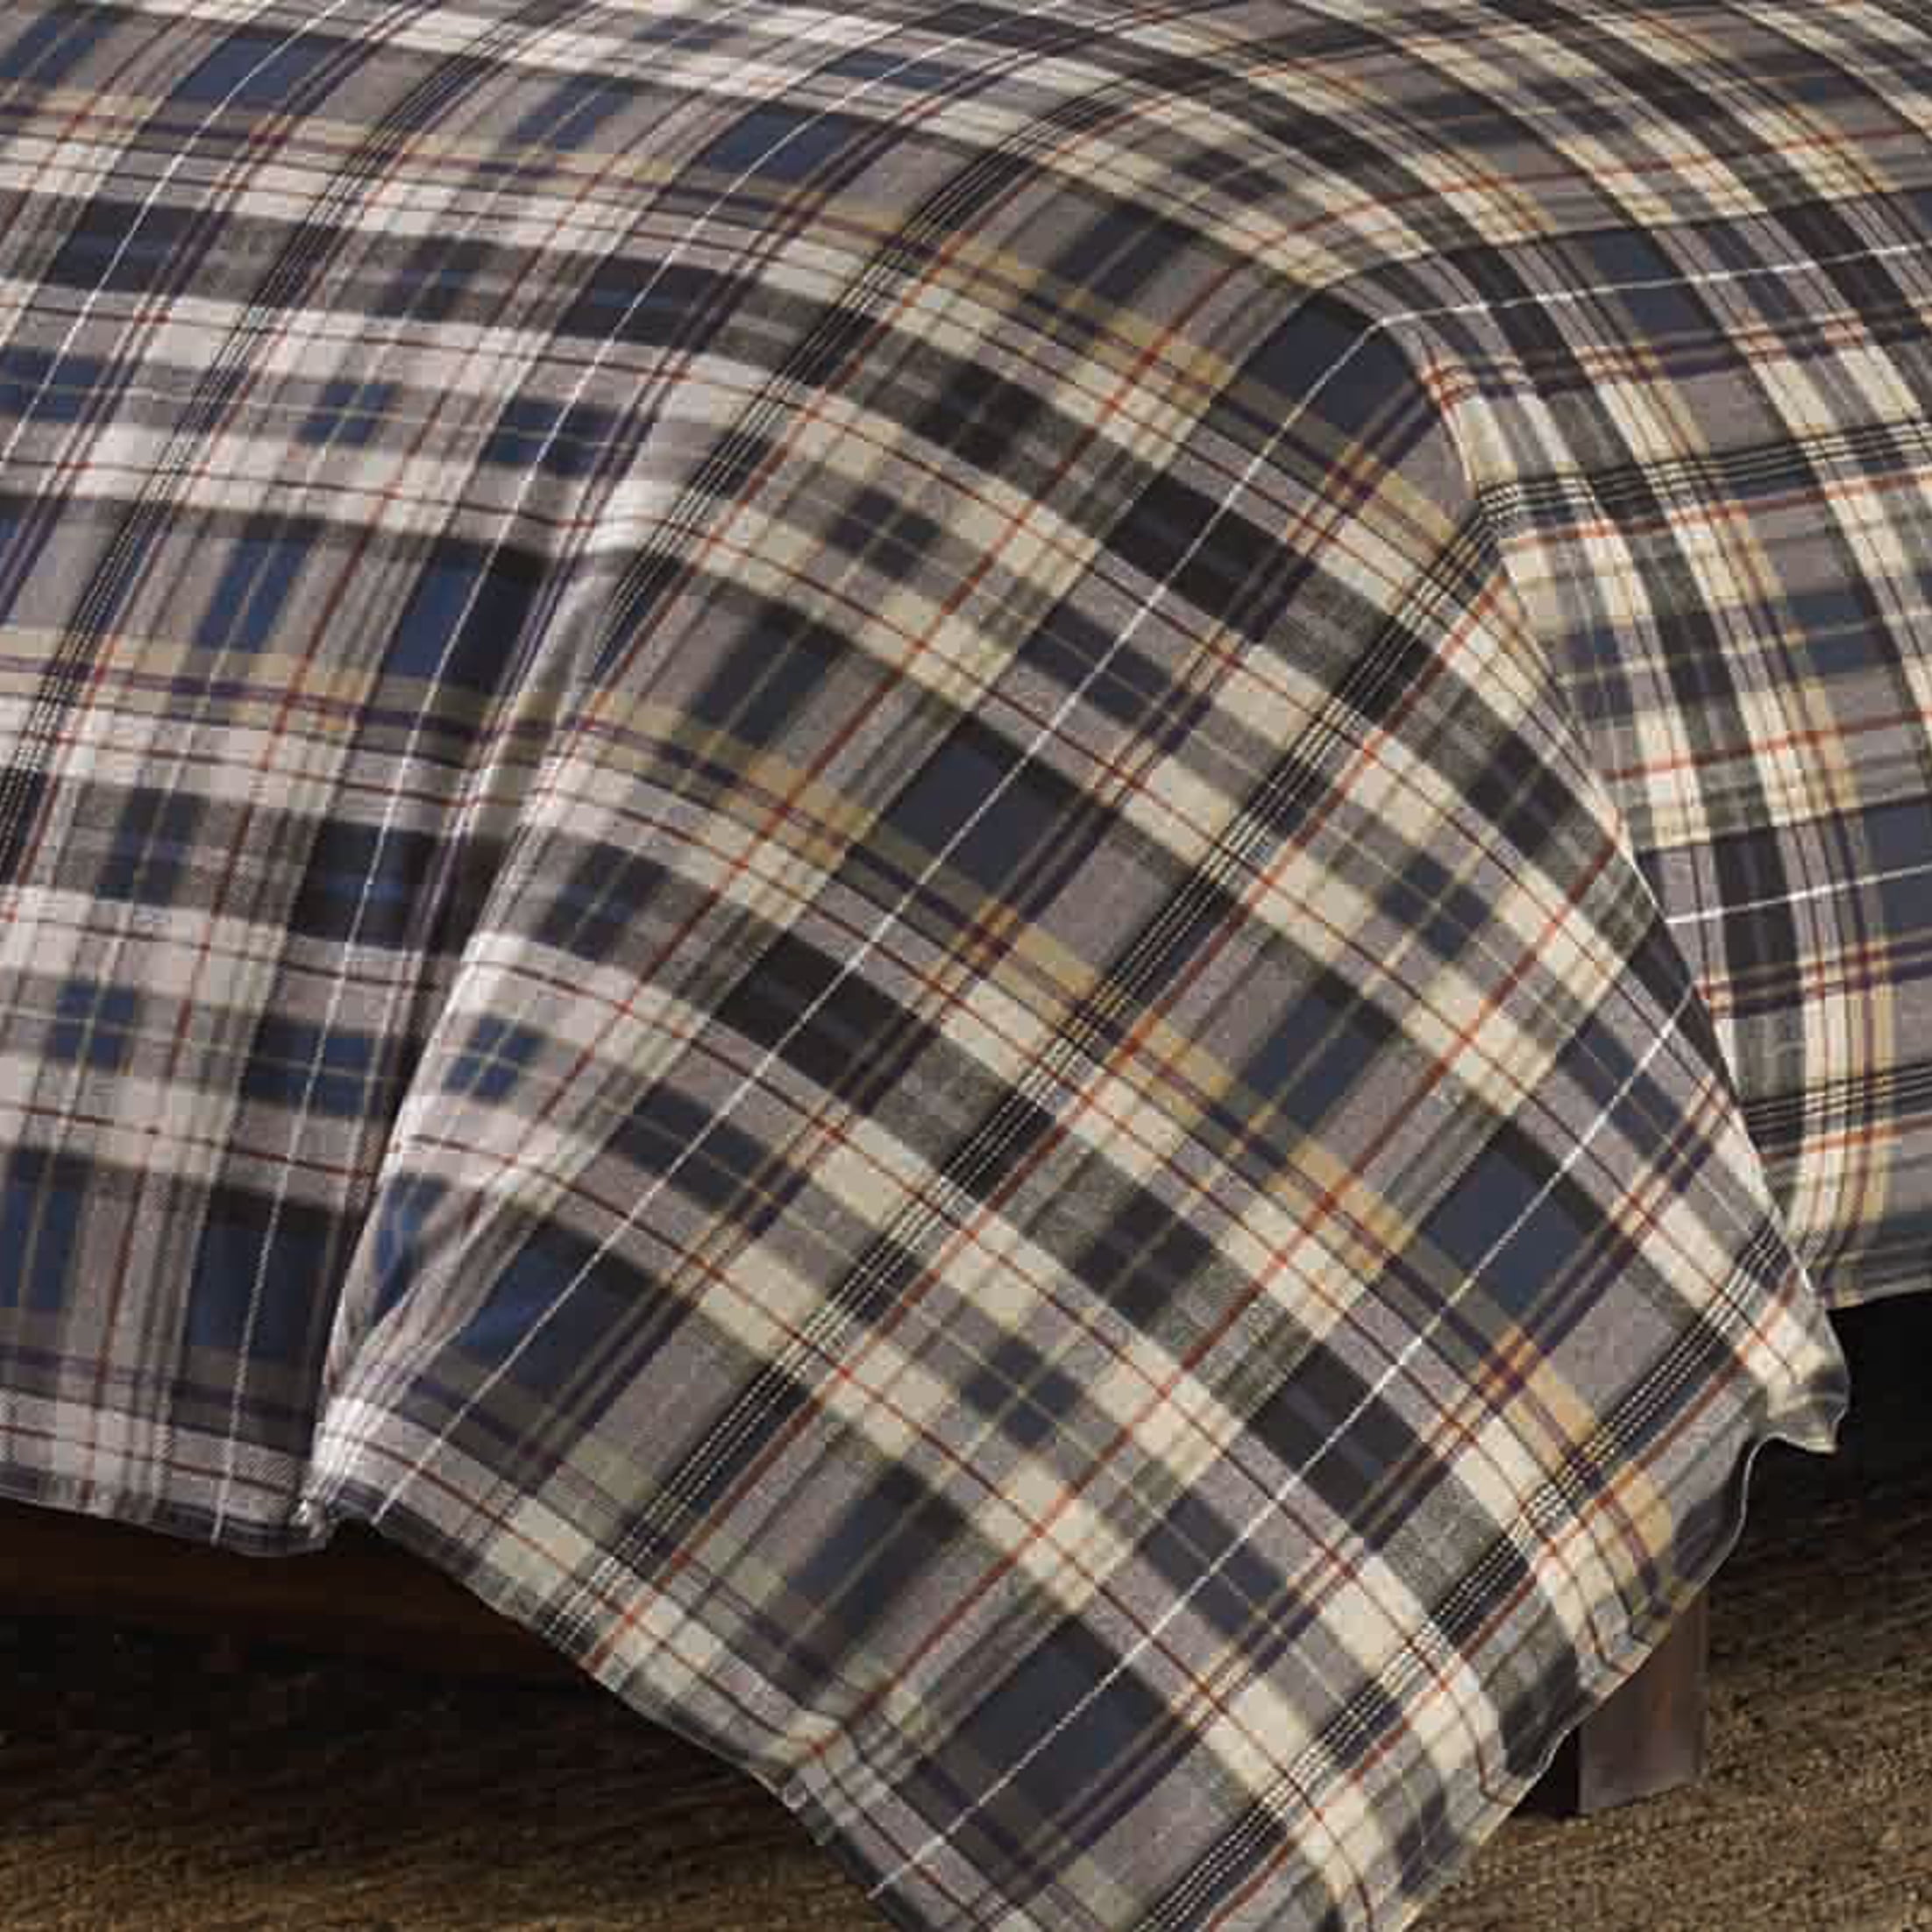 Eddie Bauer Plaid Cotton Plain Weave Comforter Sets, Full/Queen, Brown 